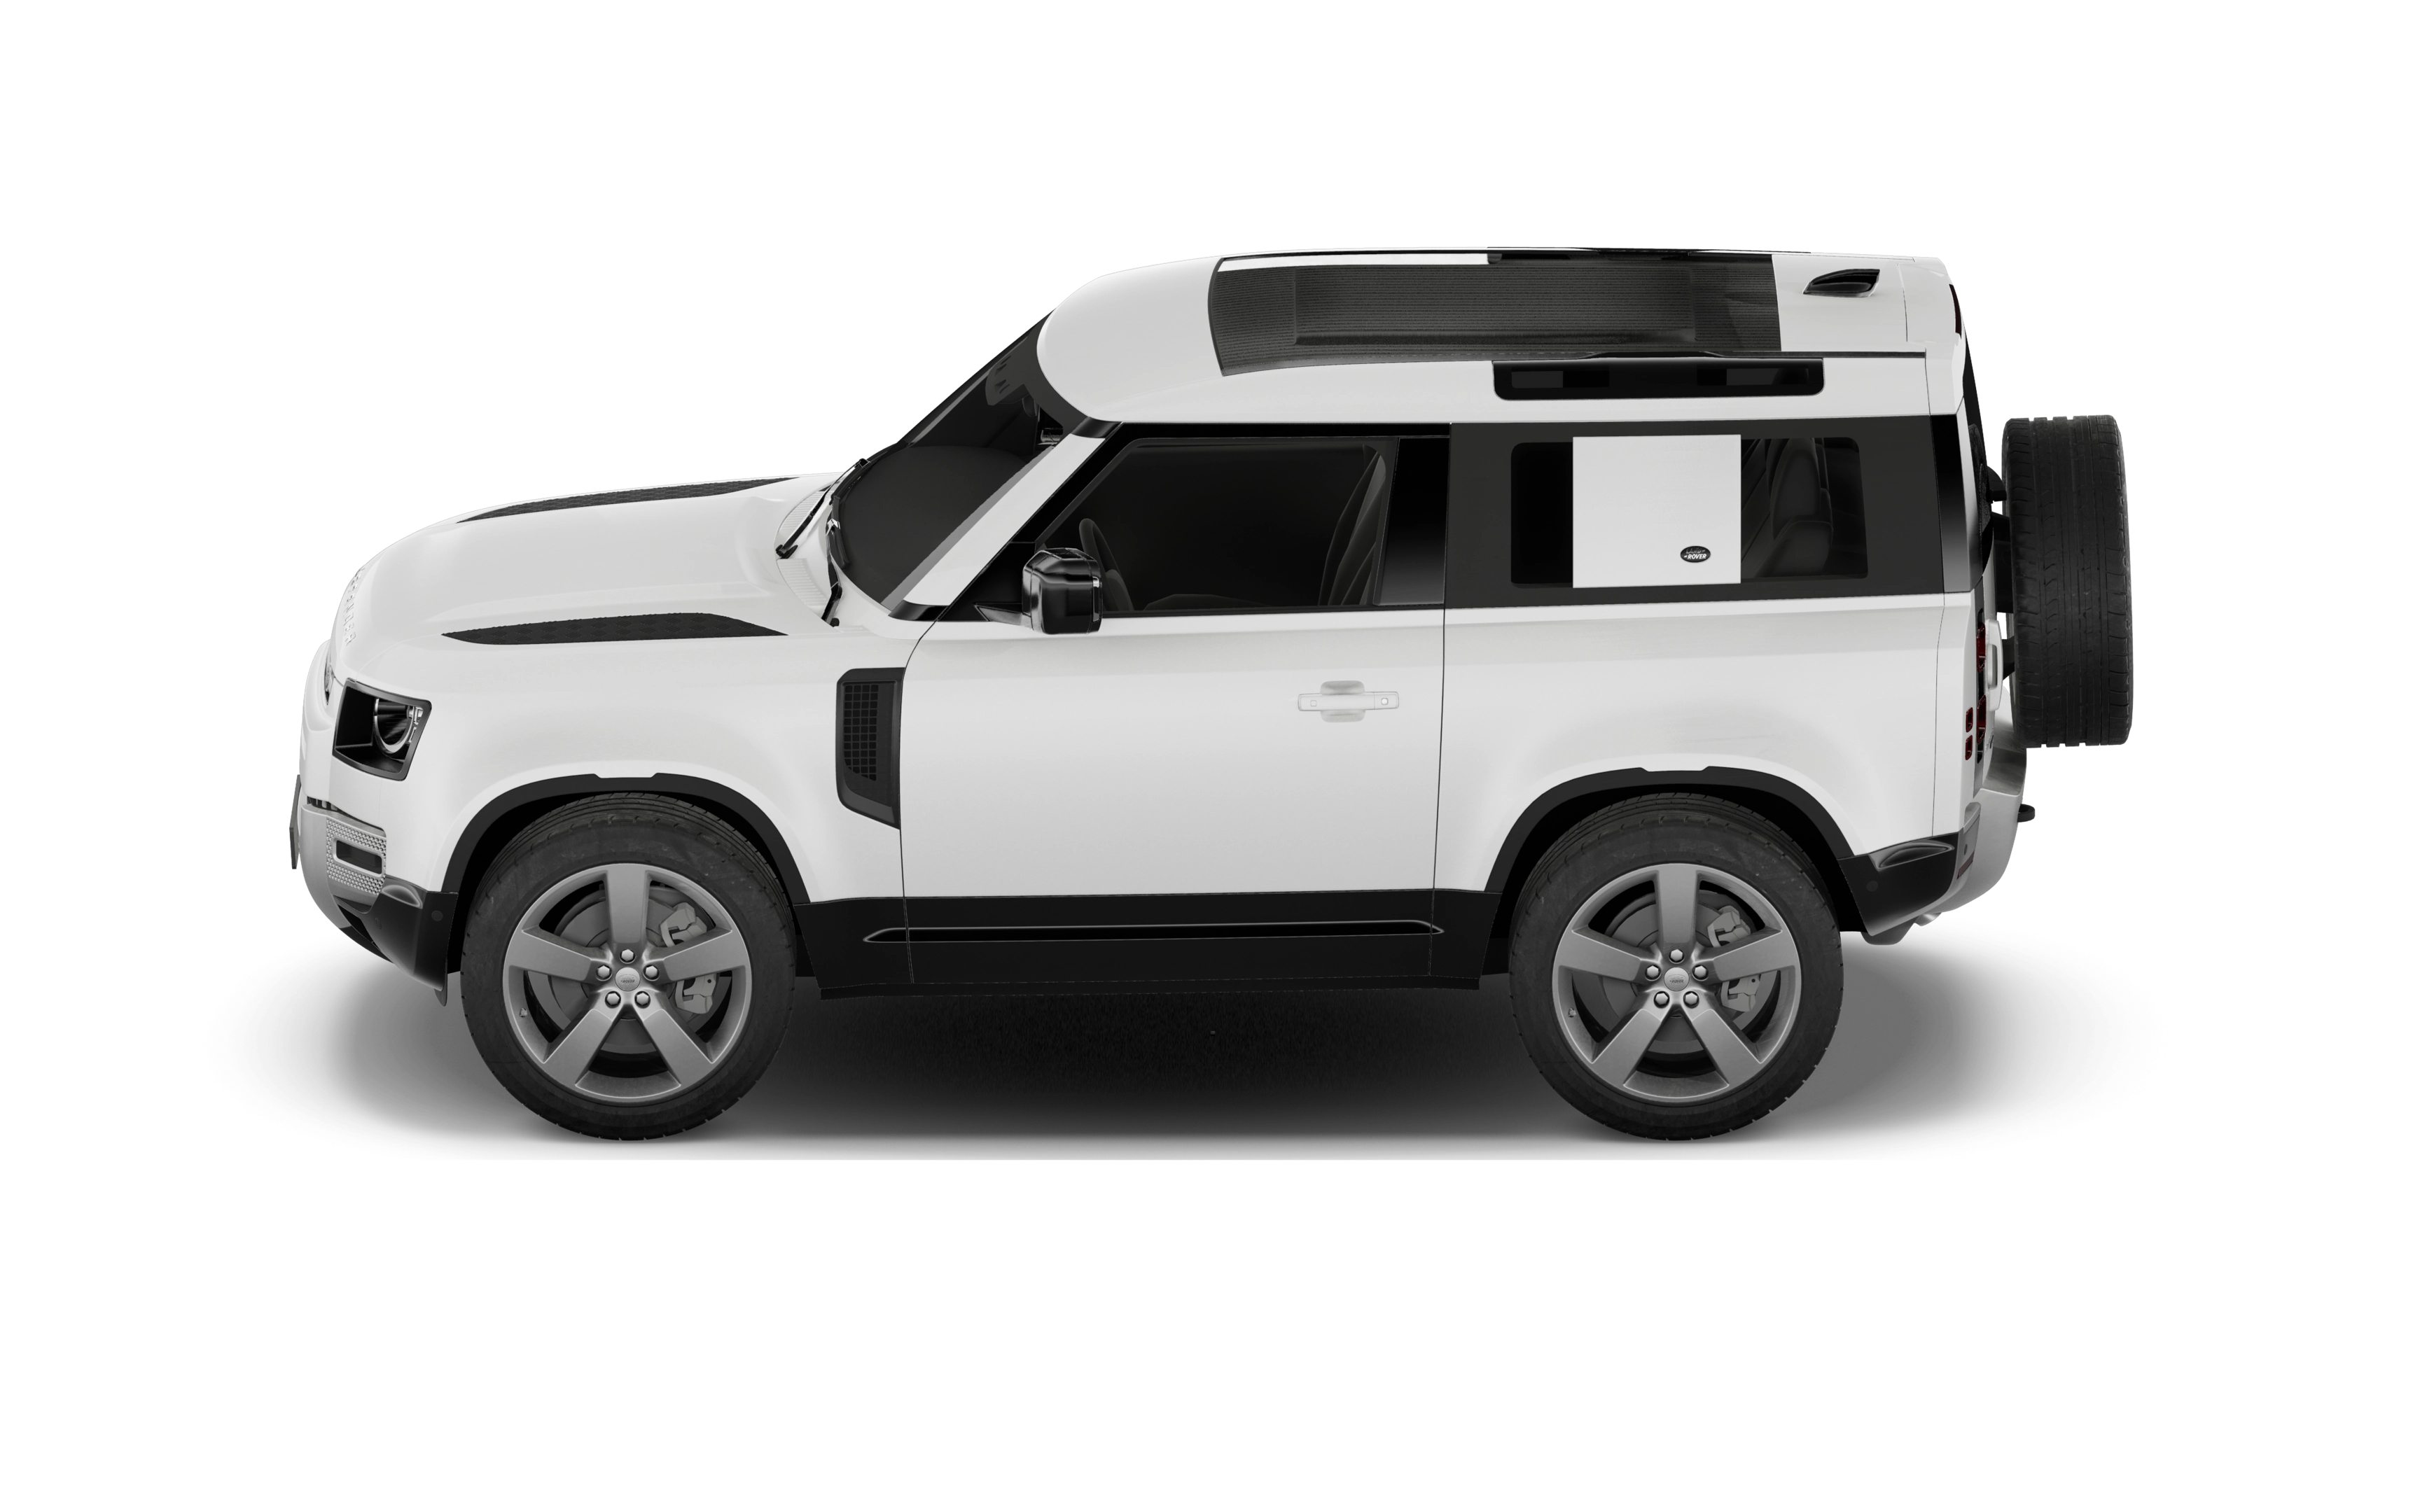 Land rover defender estate 3.0 d300 se 110 5 doors auto [7 seat]